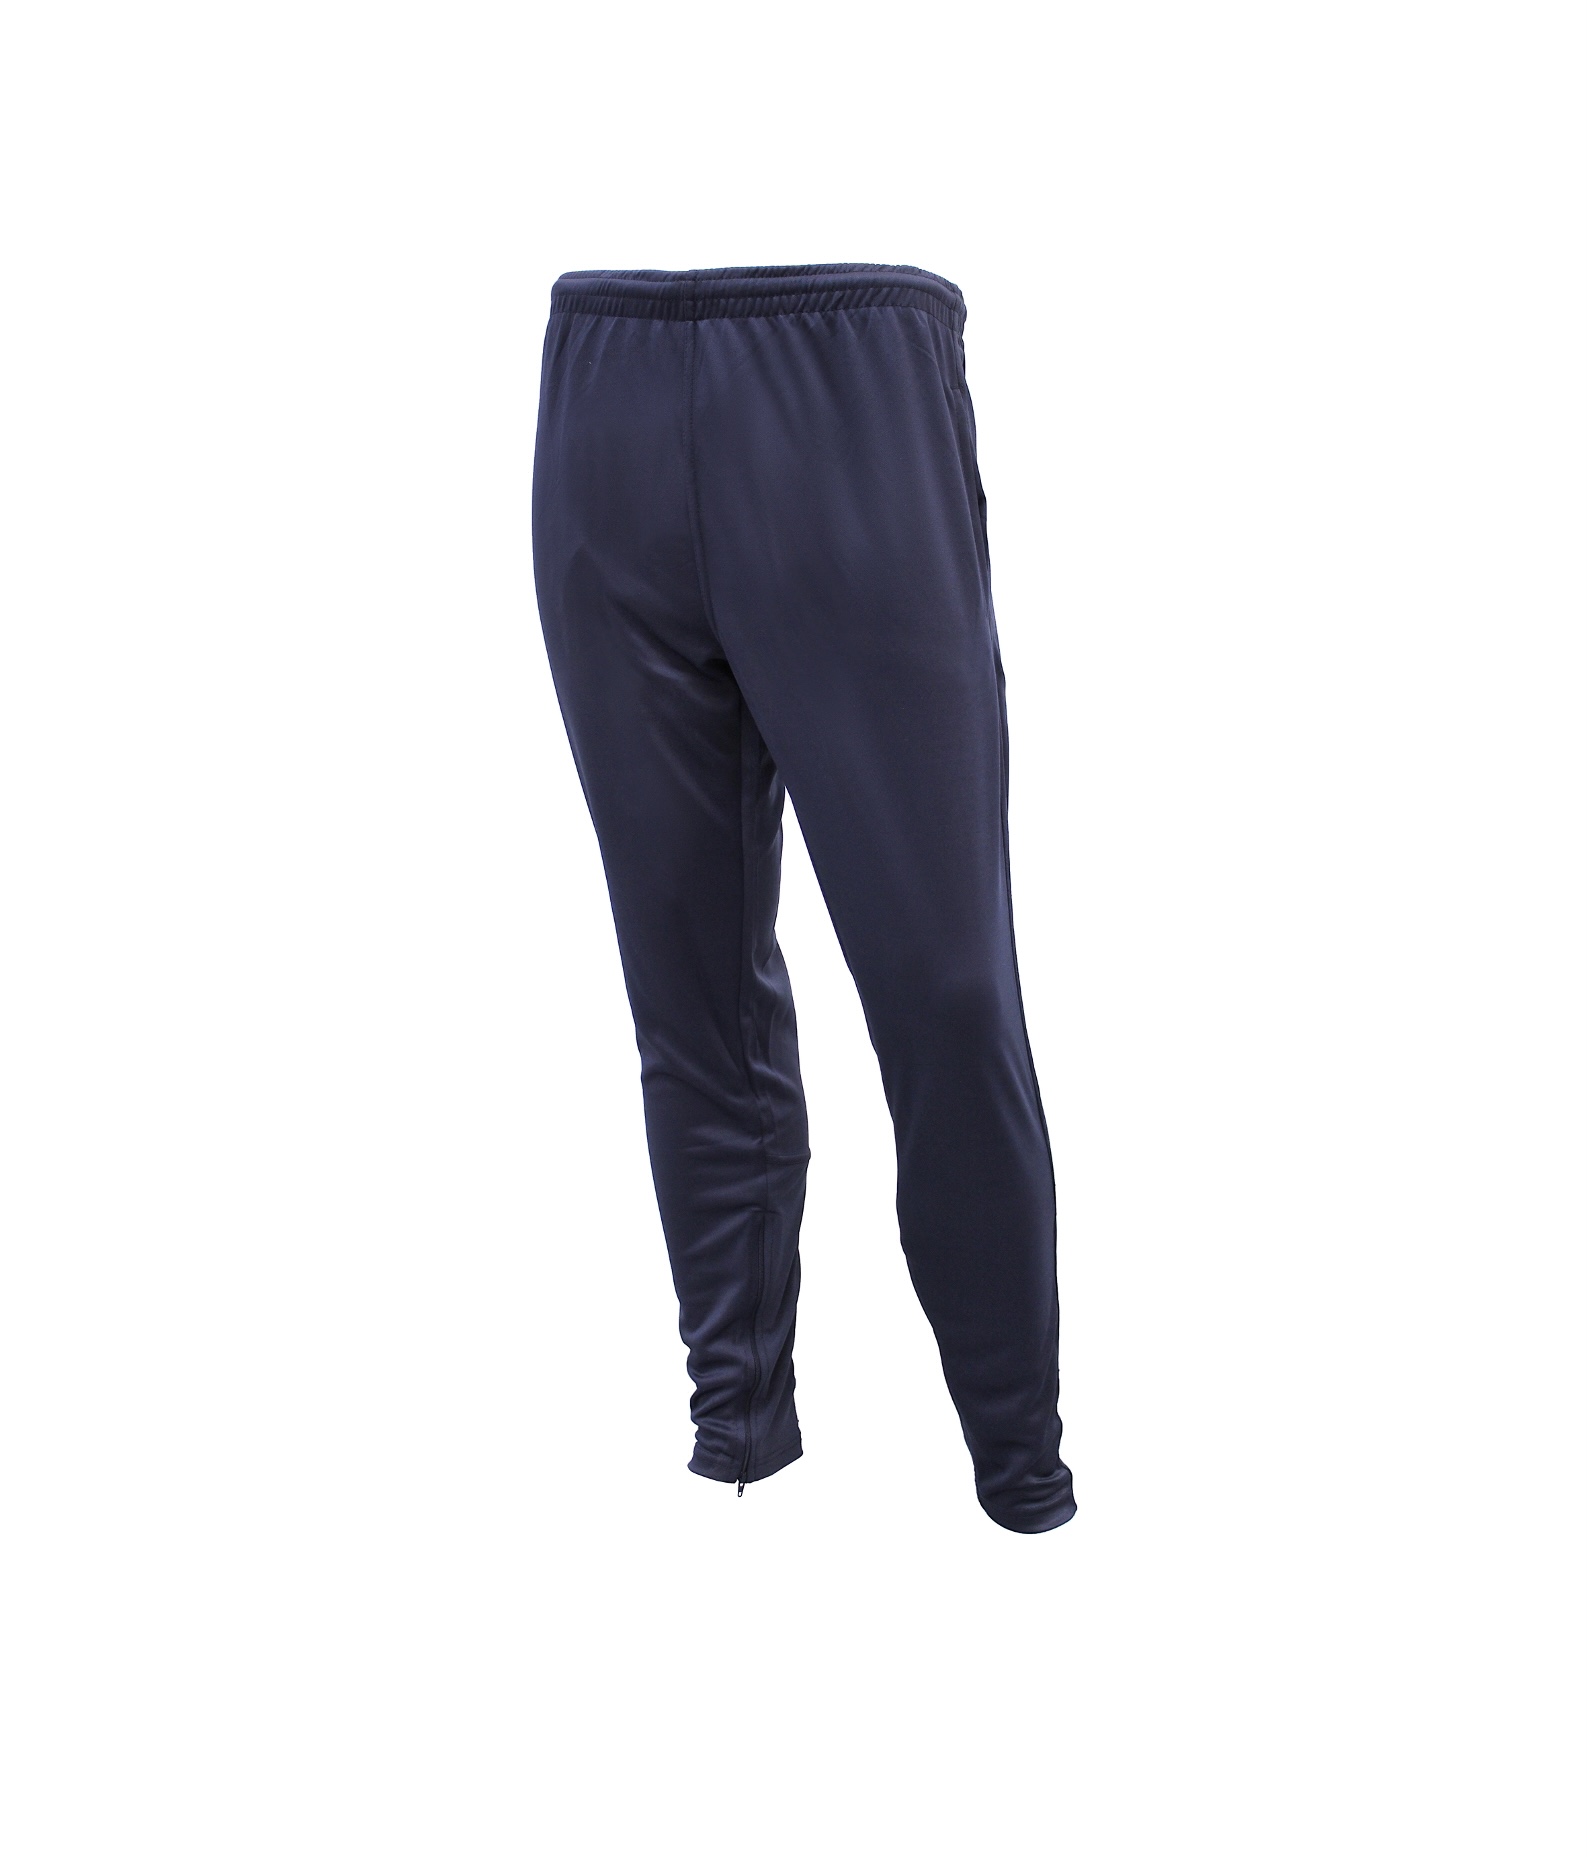 Falcon Skinny Jog Pants - Navy - Quality Schoolwear